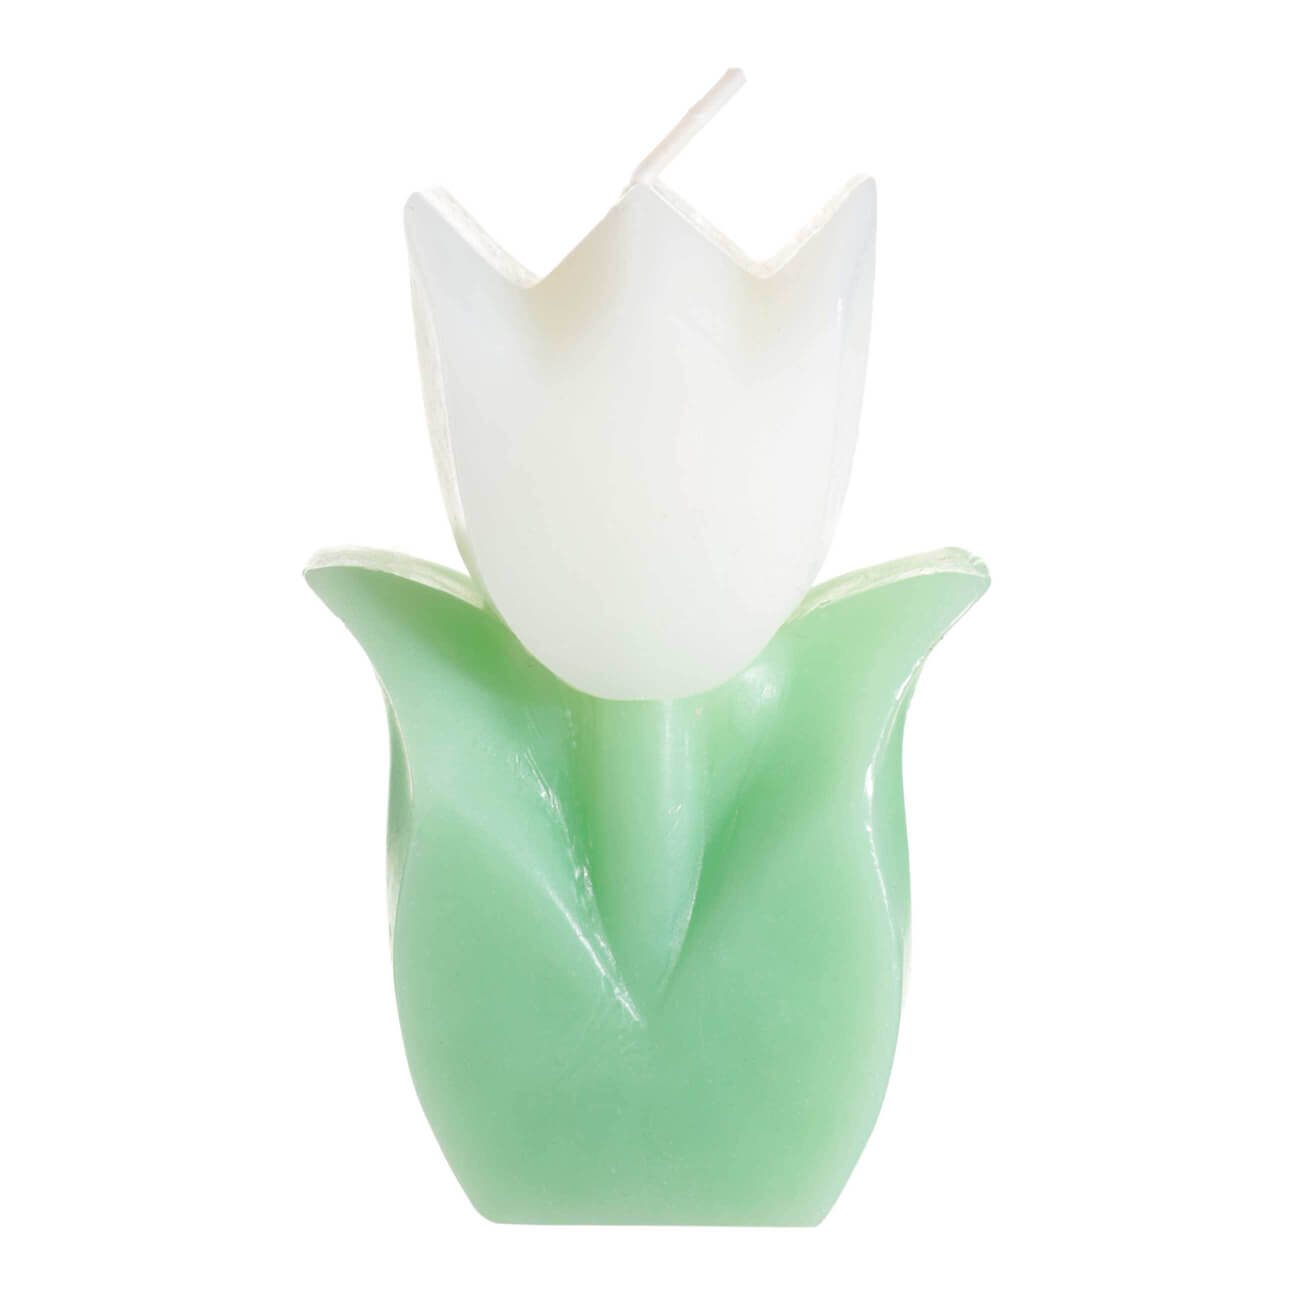 Свеча, 10 см, бело-зеленая, Тюльпан, Tulip garden свеча насыпная 100 г желтая